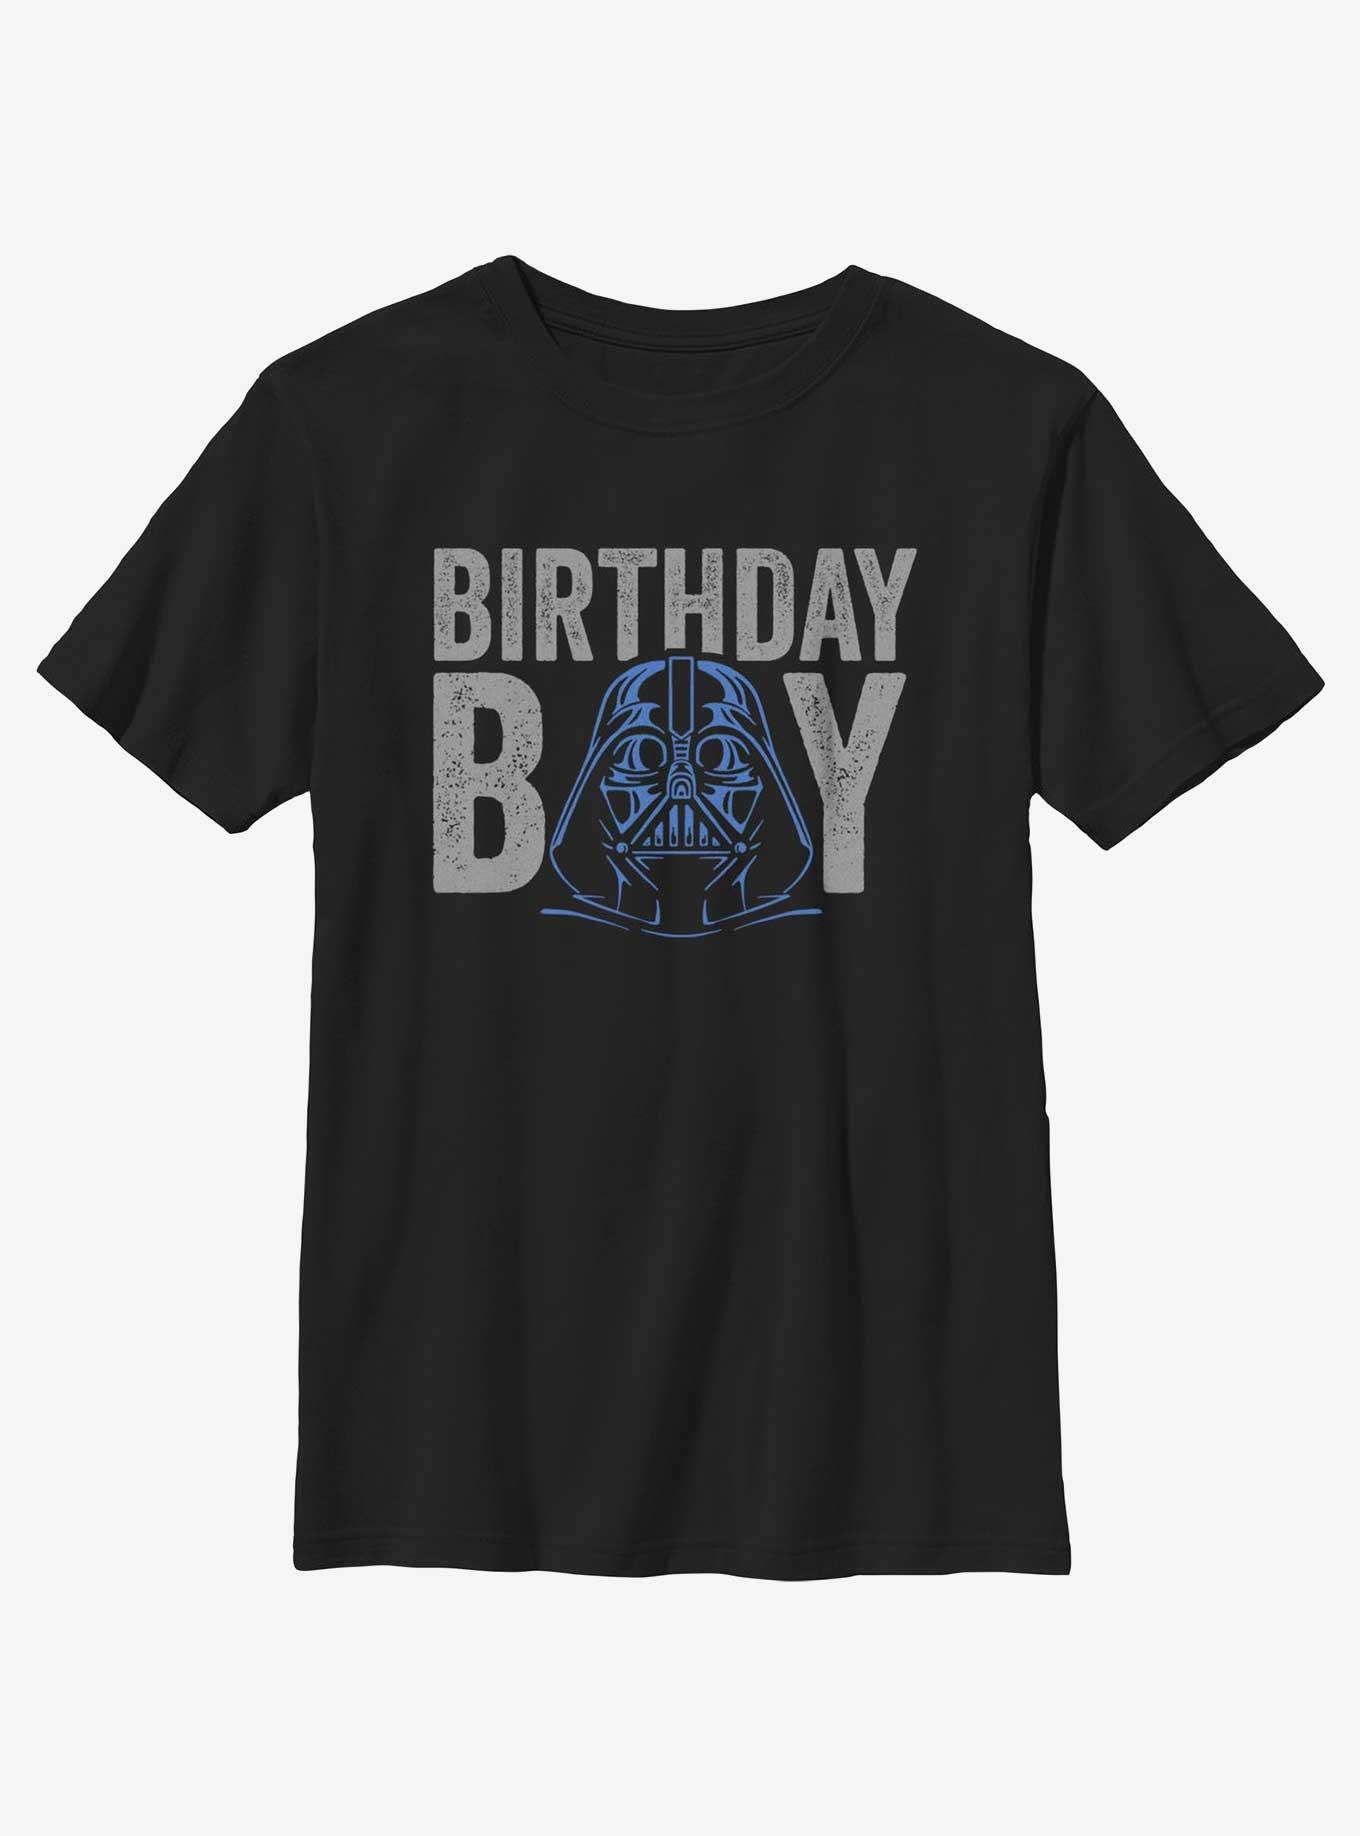 Star Wars Darth Vader Birthday Boy Youth T-Shirt, BLACK, hi-res